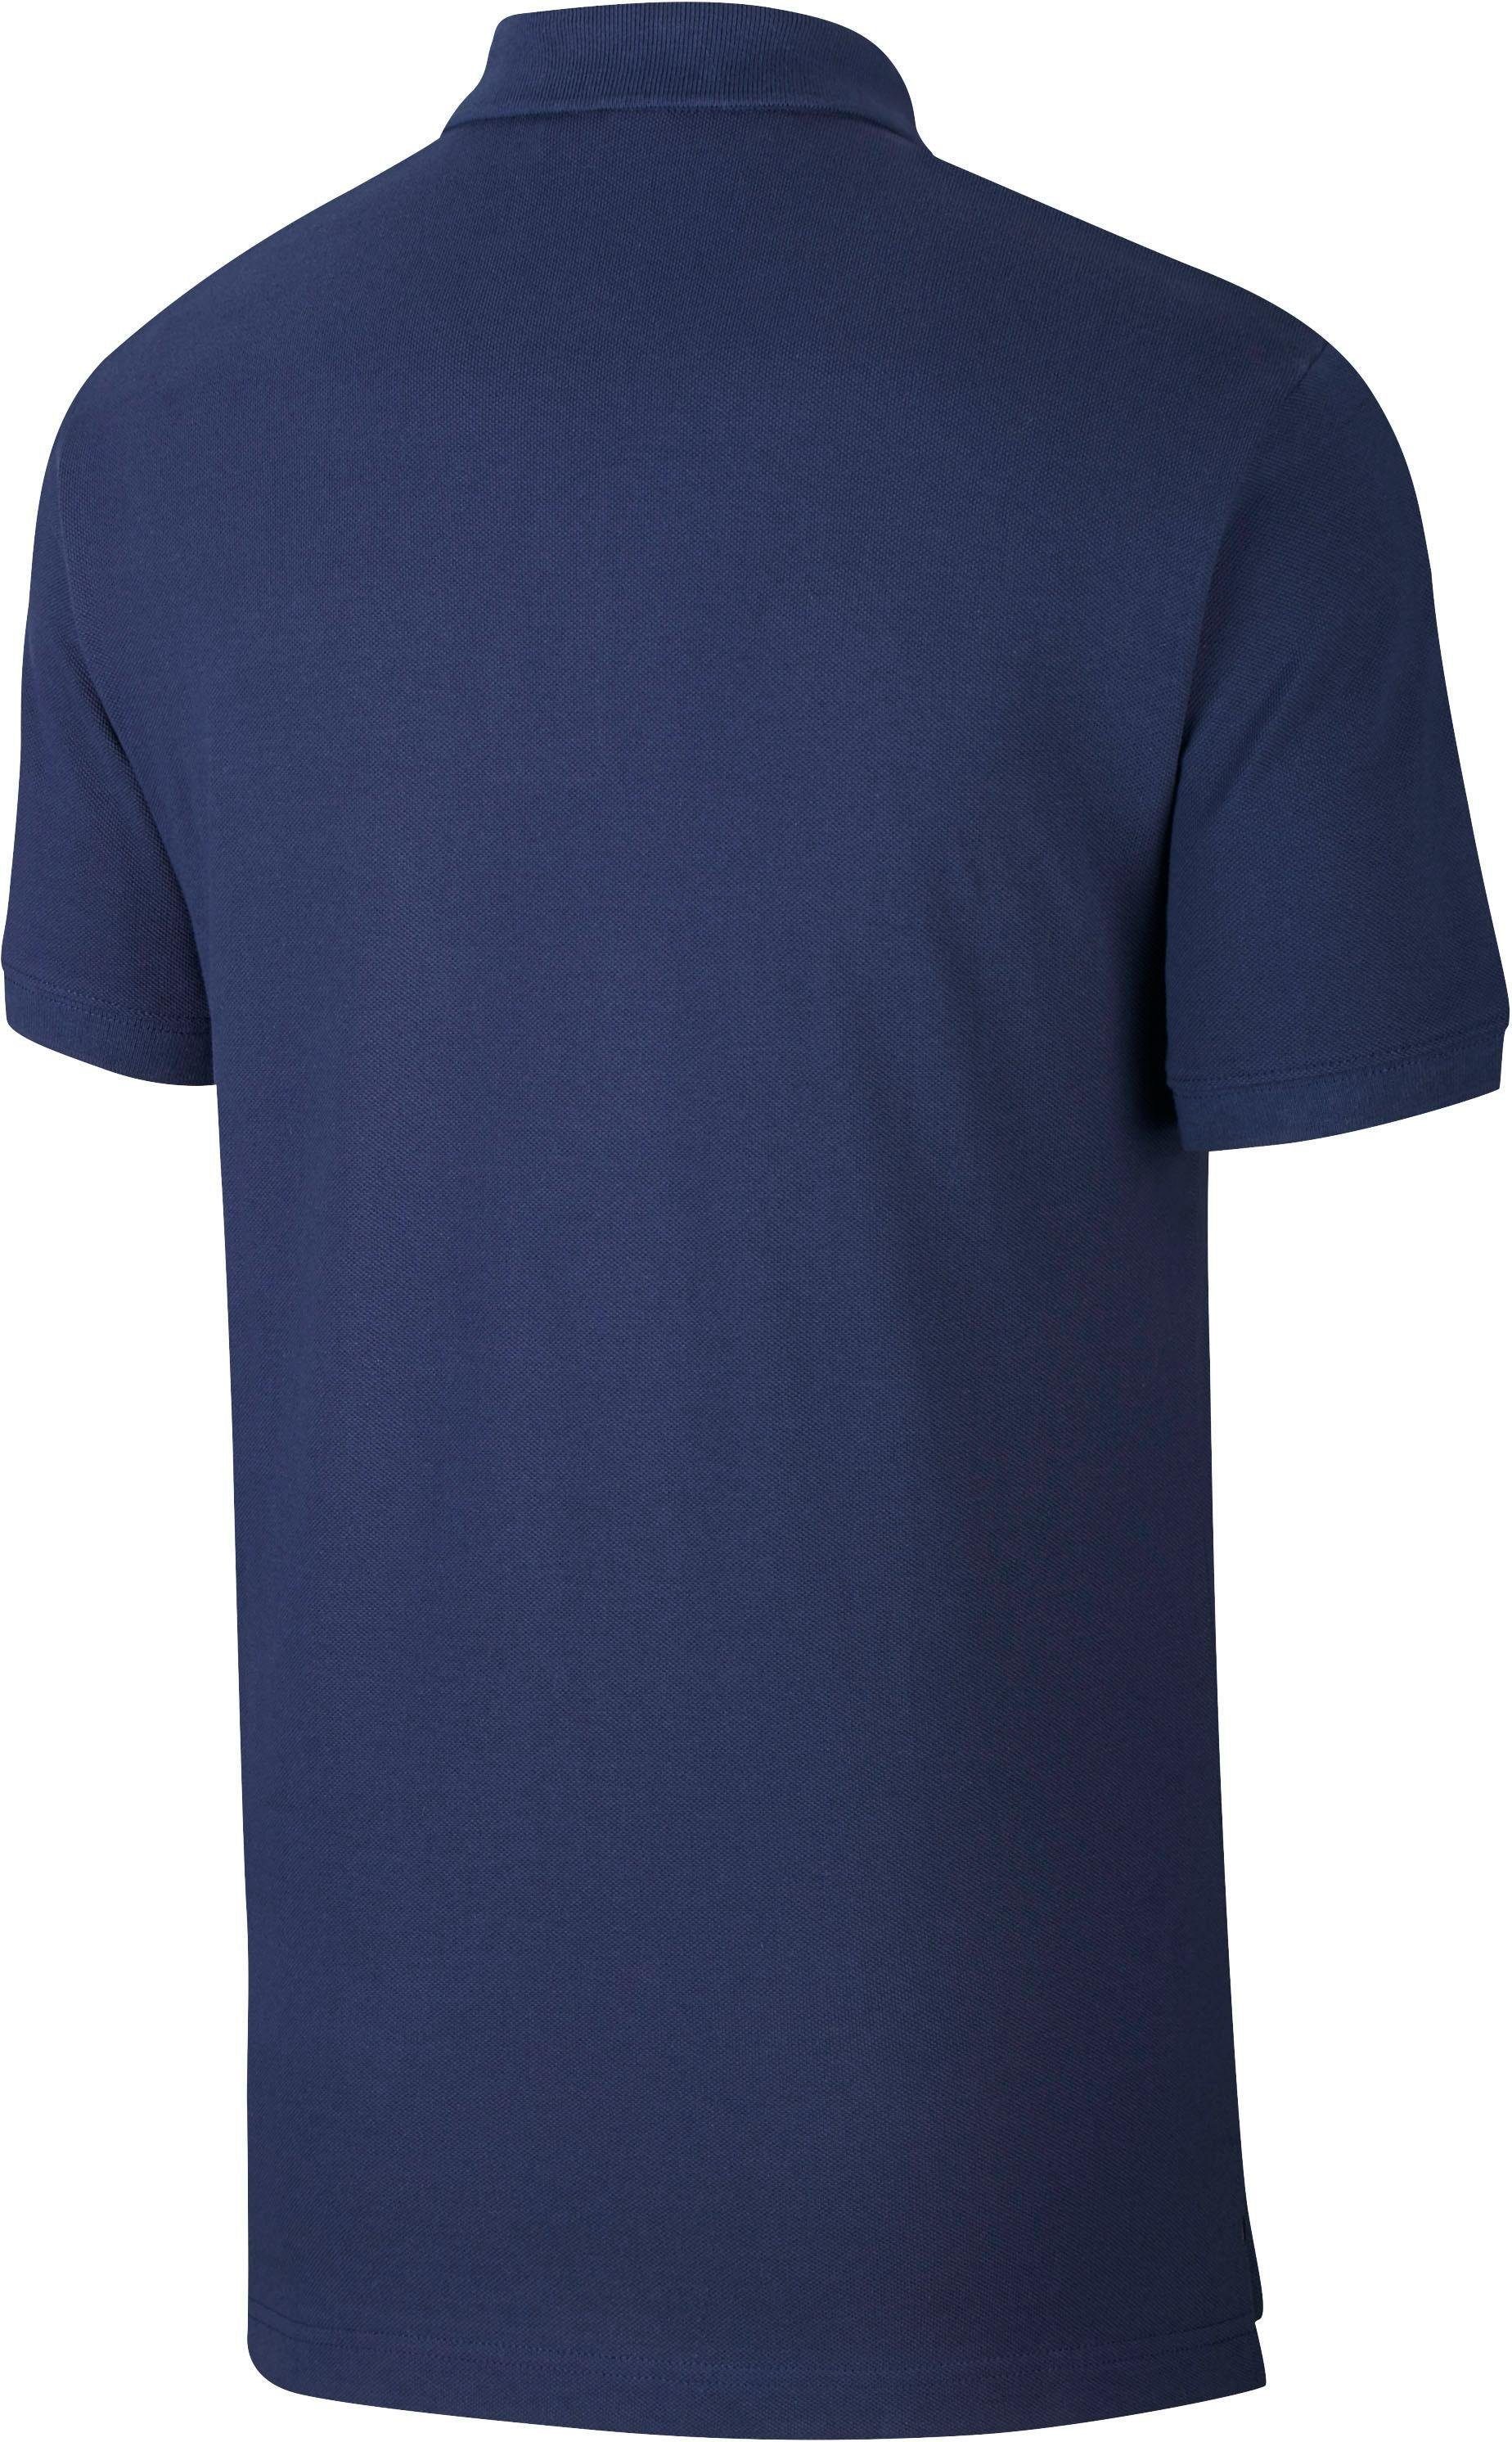 Polo Men's Sportswear Poloshirt Nike marine